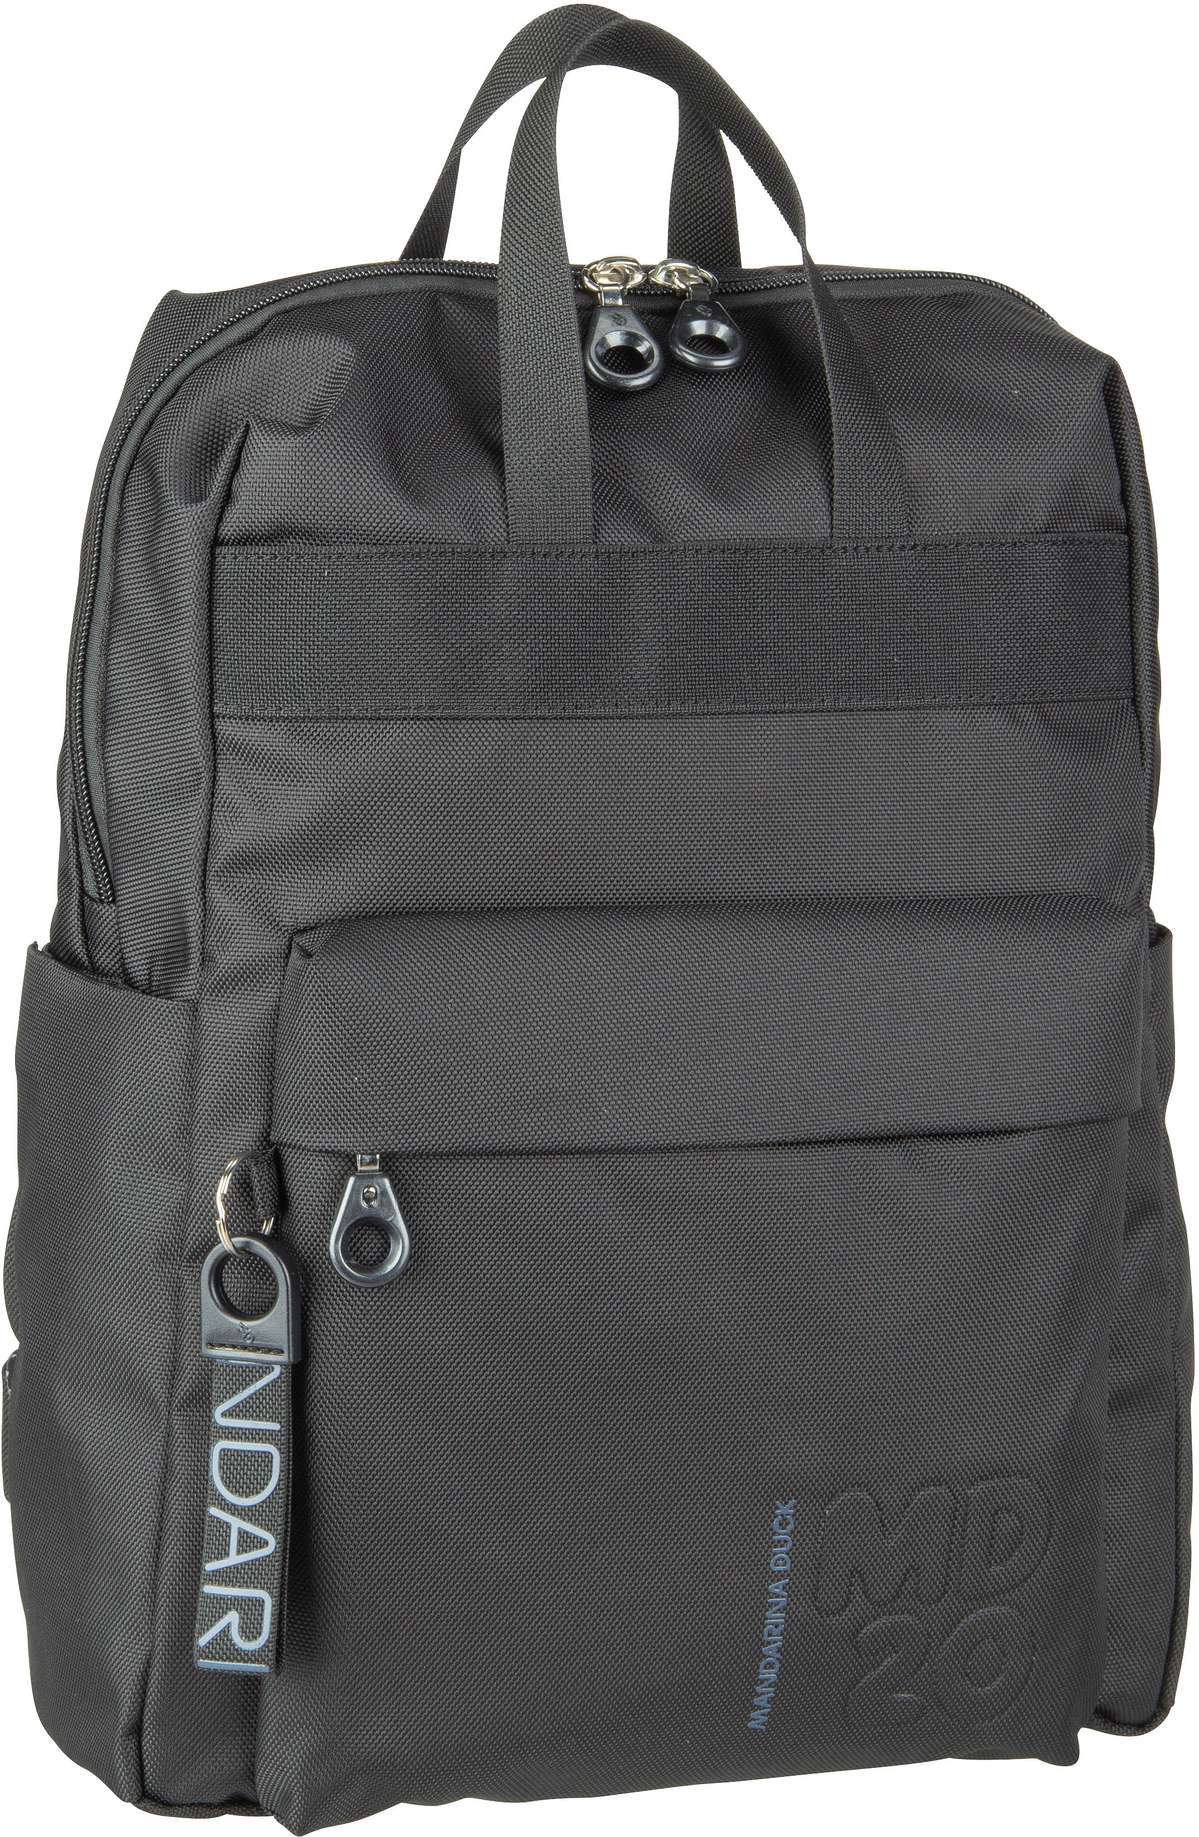 Mandarina Duck MD20 Backpack QMT17 - Black